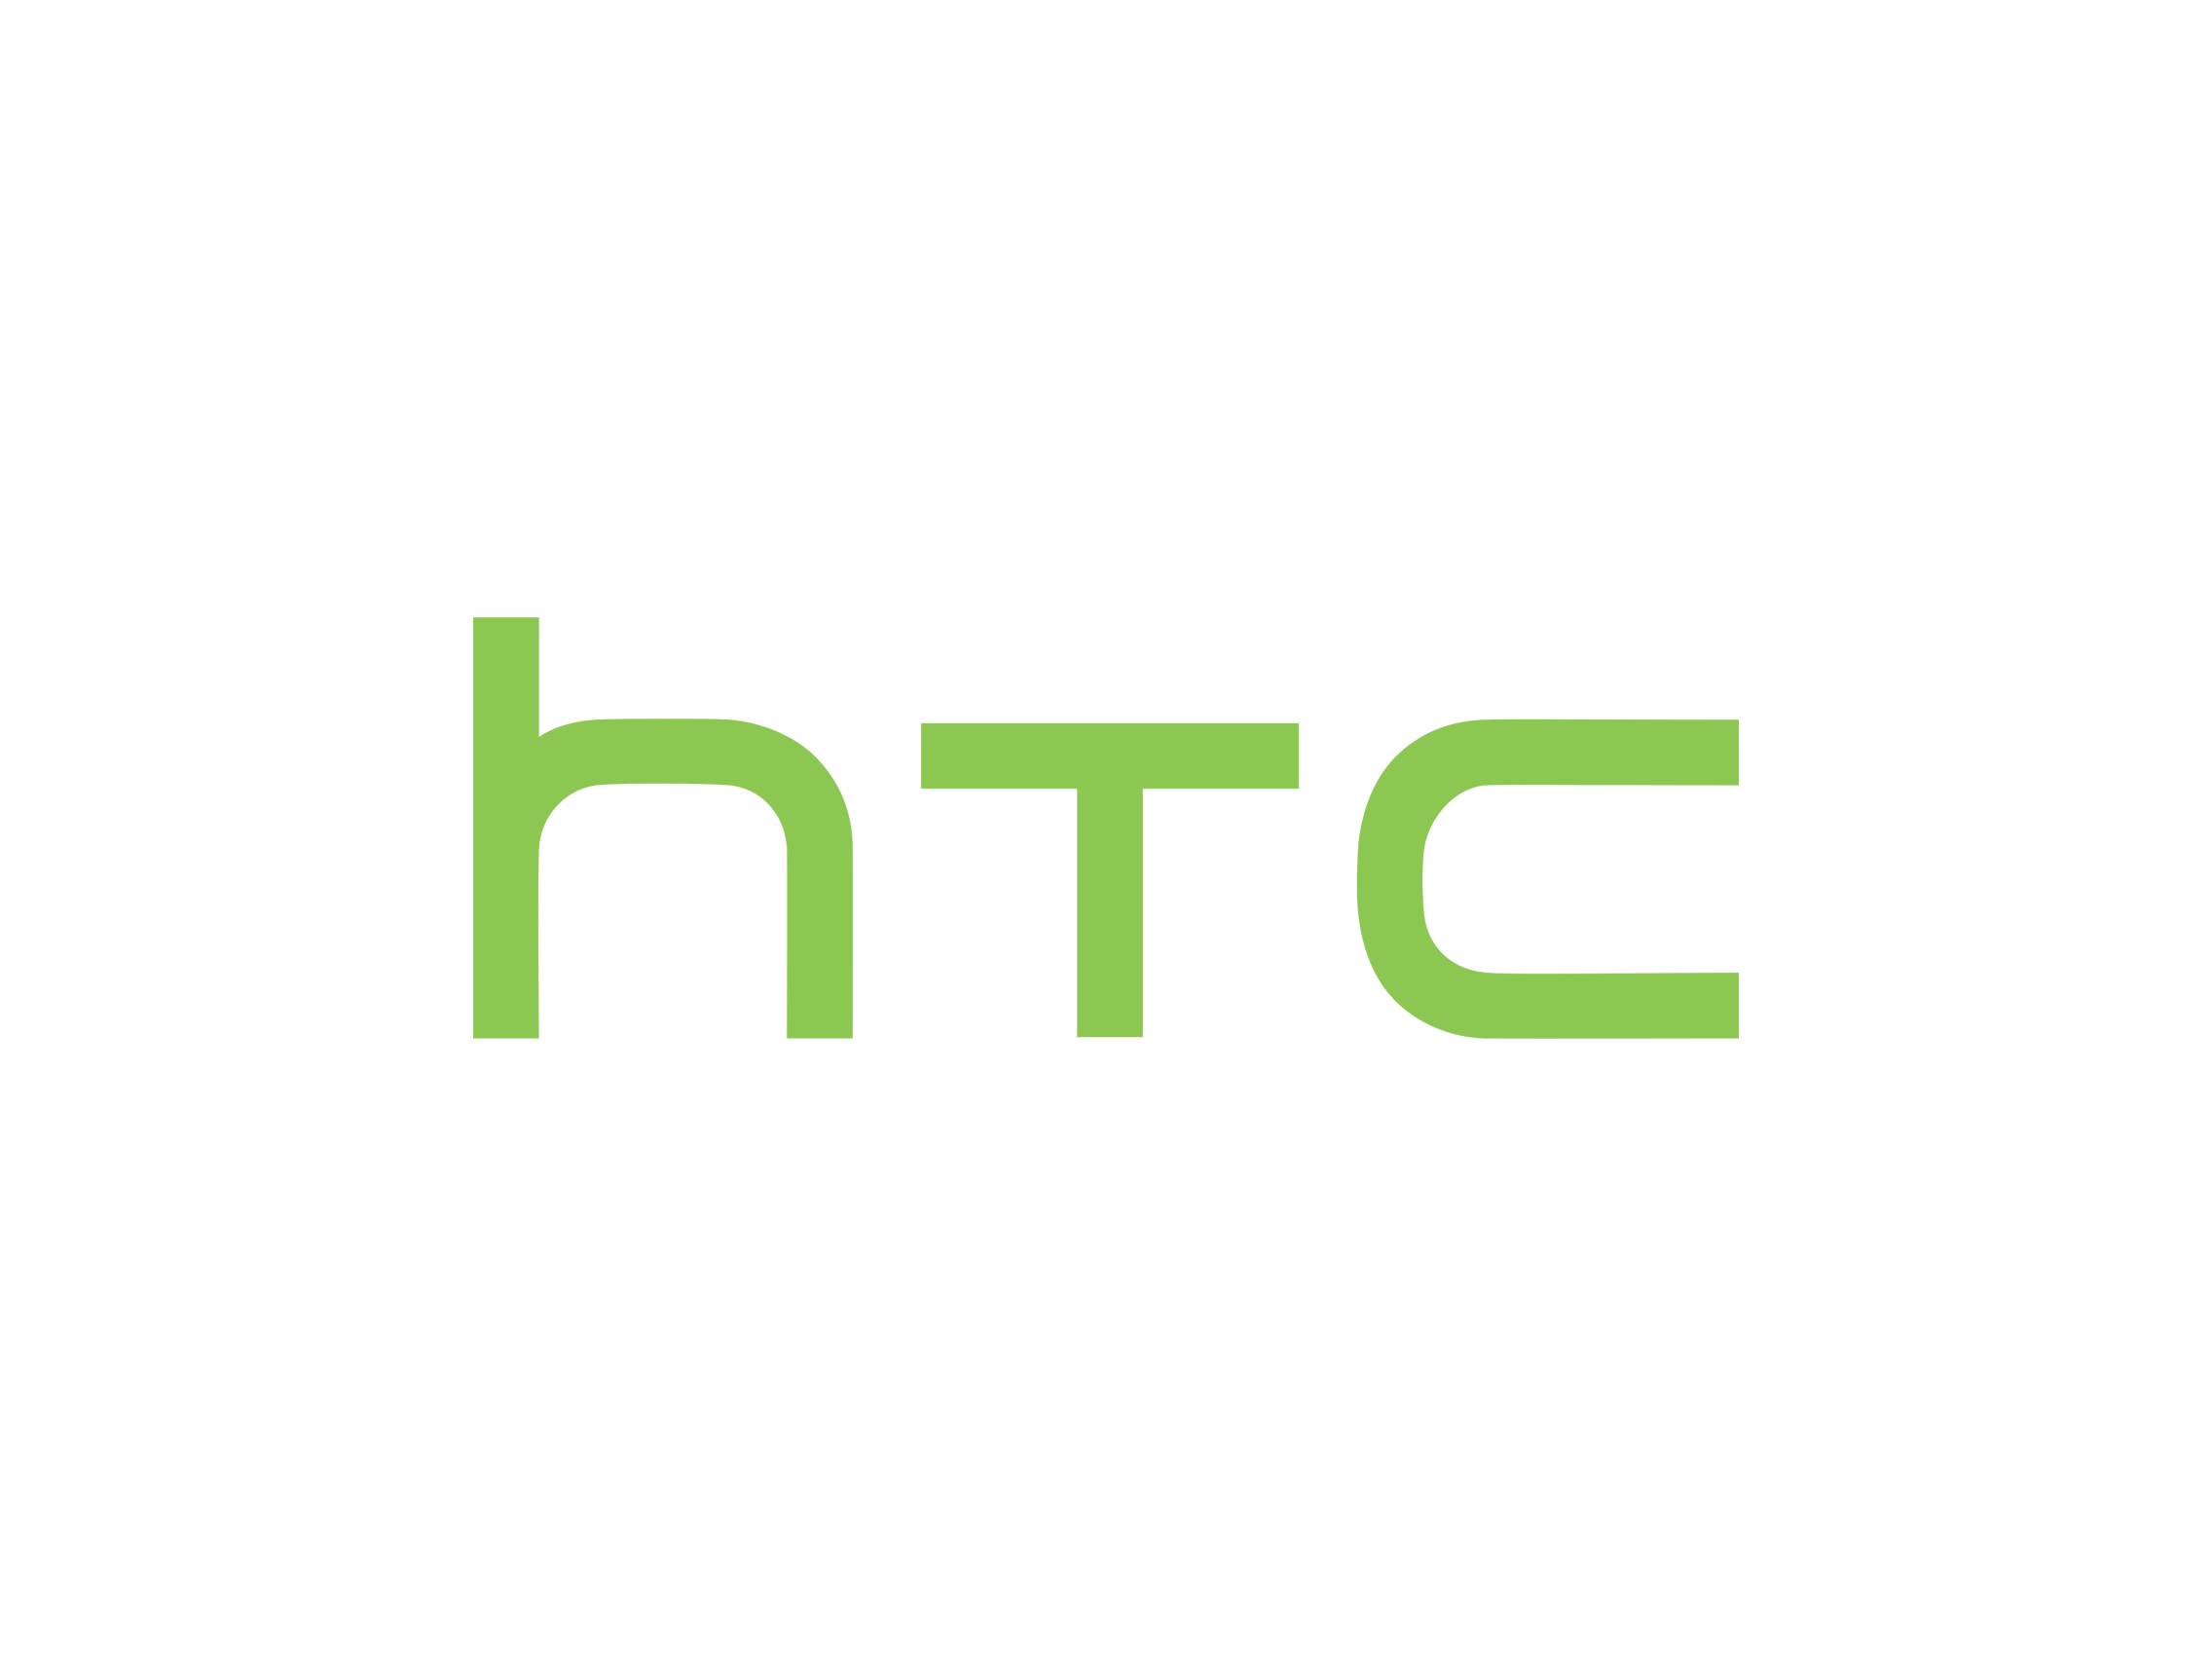 HTC-logo.png